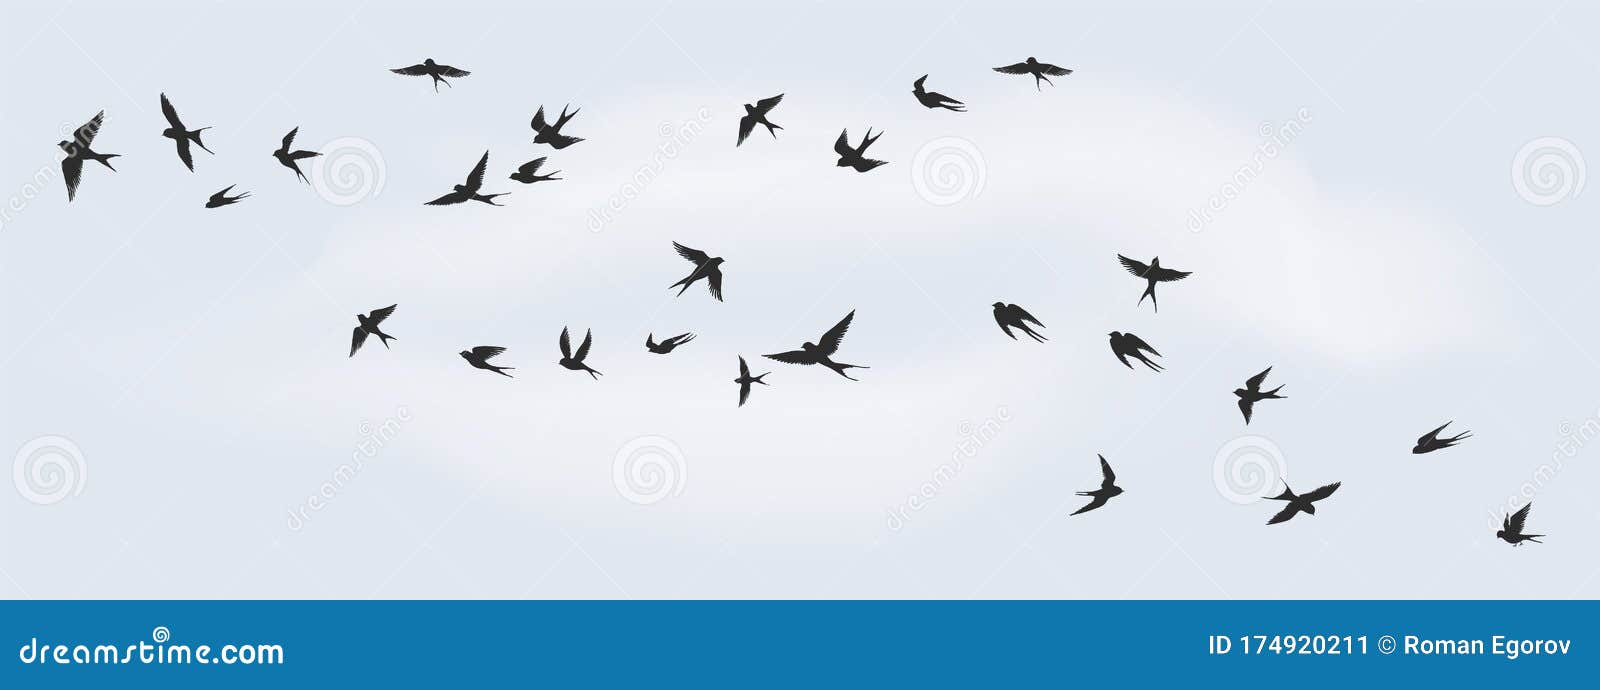 flying birds silhouette. flock of black marine birds, doves, seagulls or swallows  on white background. 